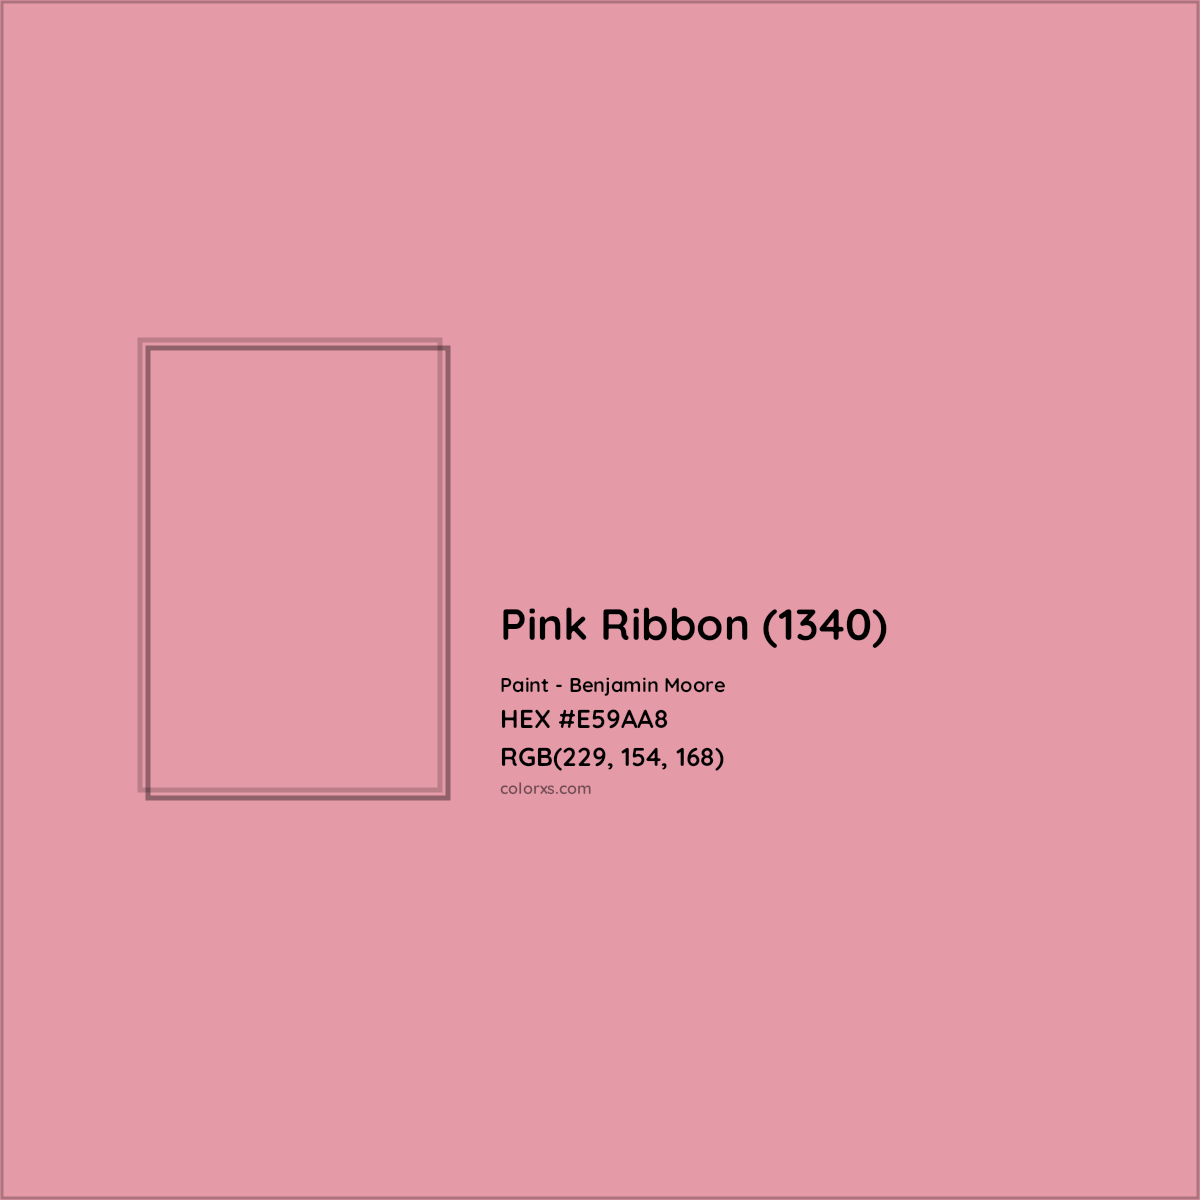 HEX #E59AA8 Pink Ribbon (1340) Paint Benjamin Moore - Color Code